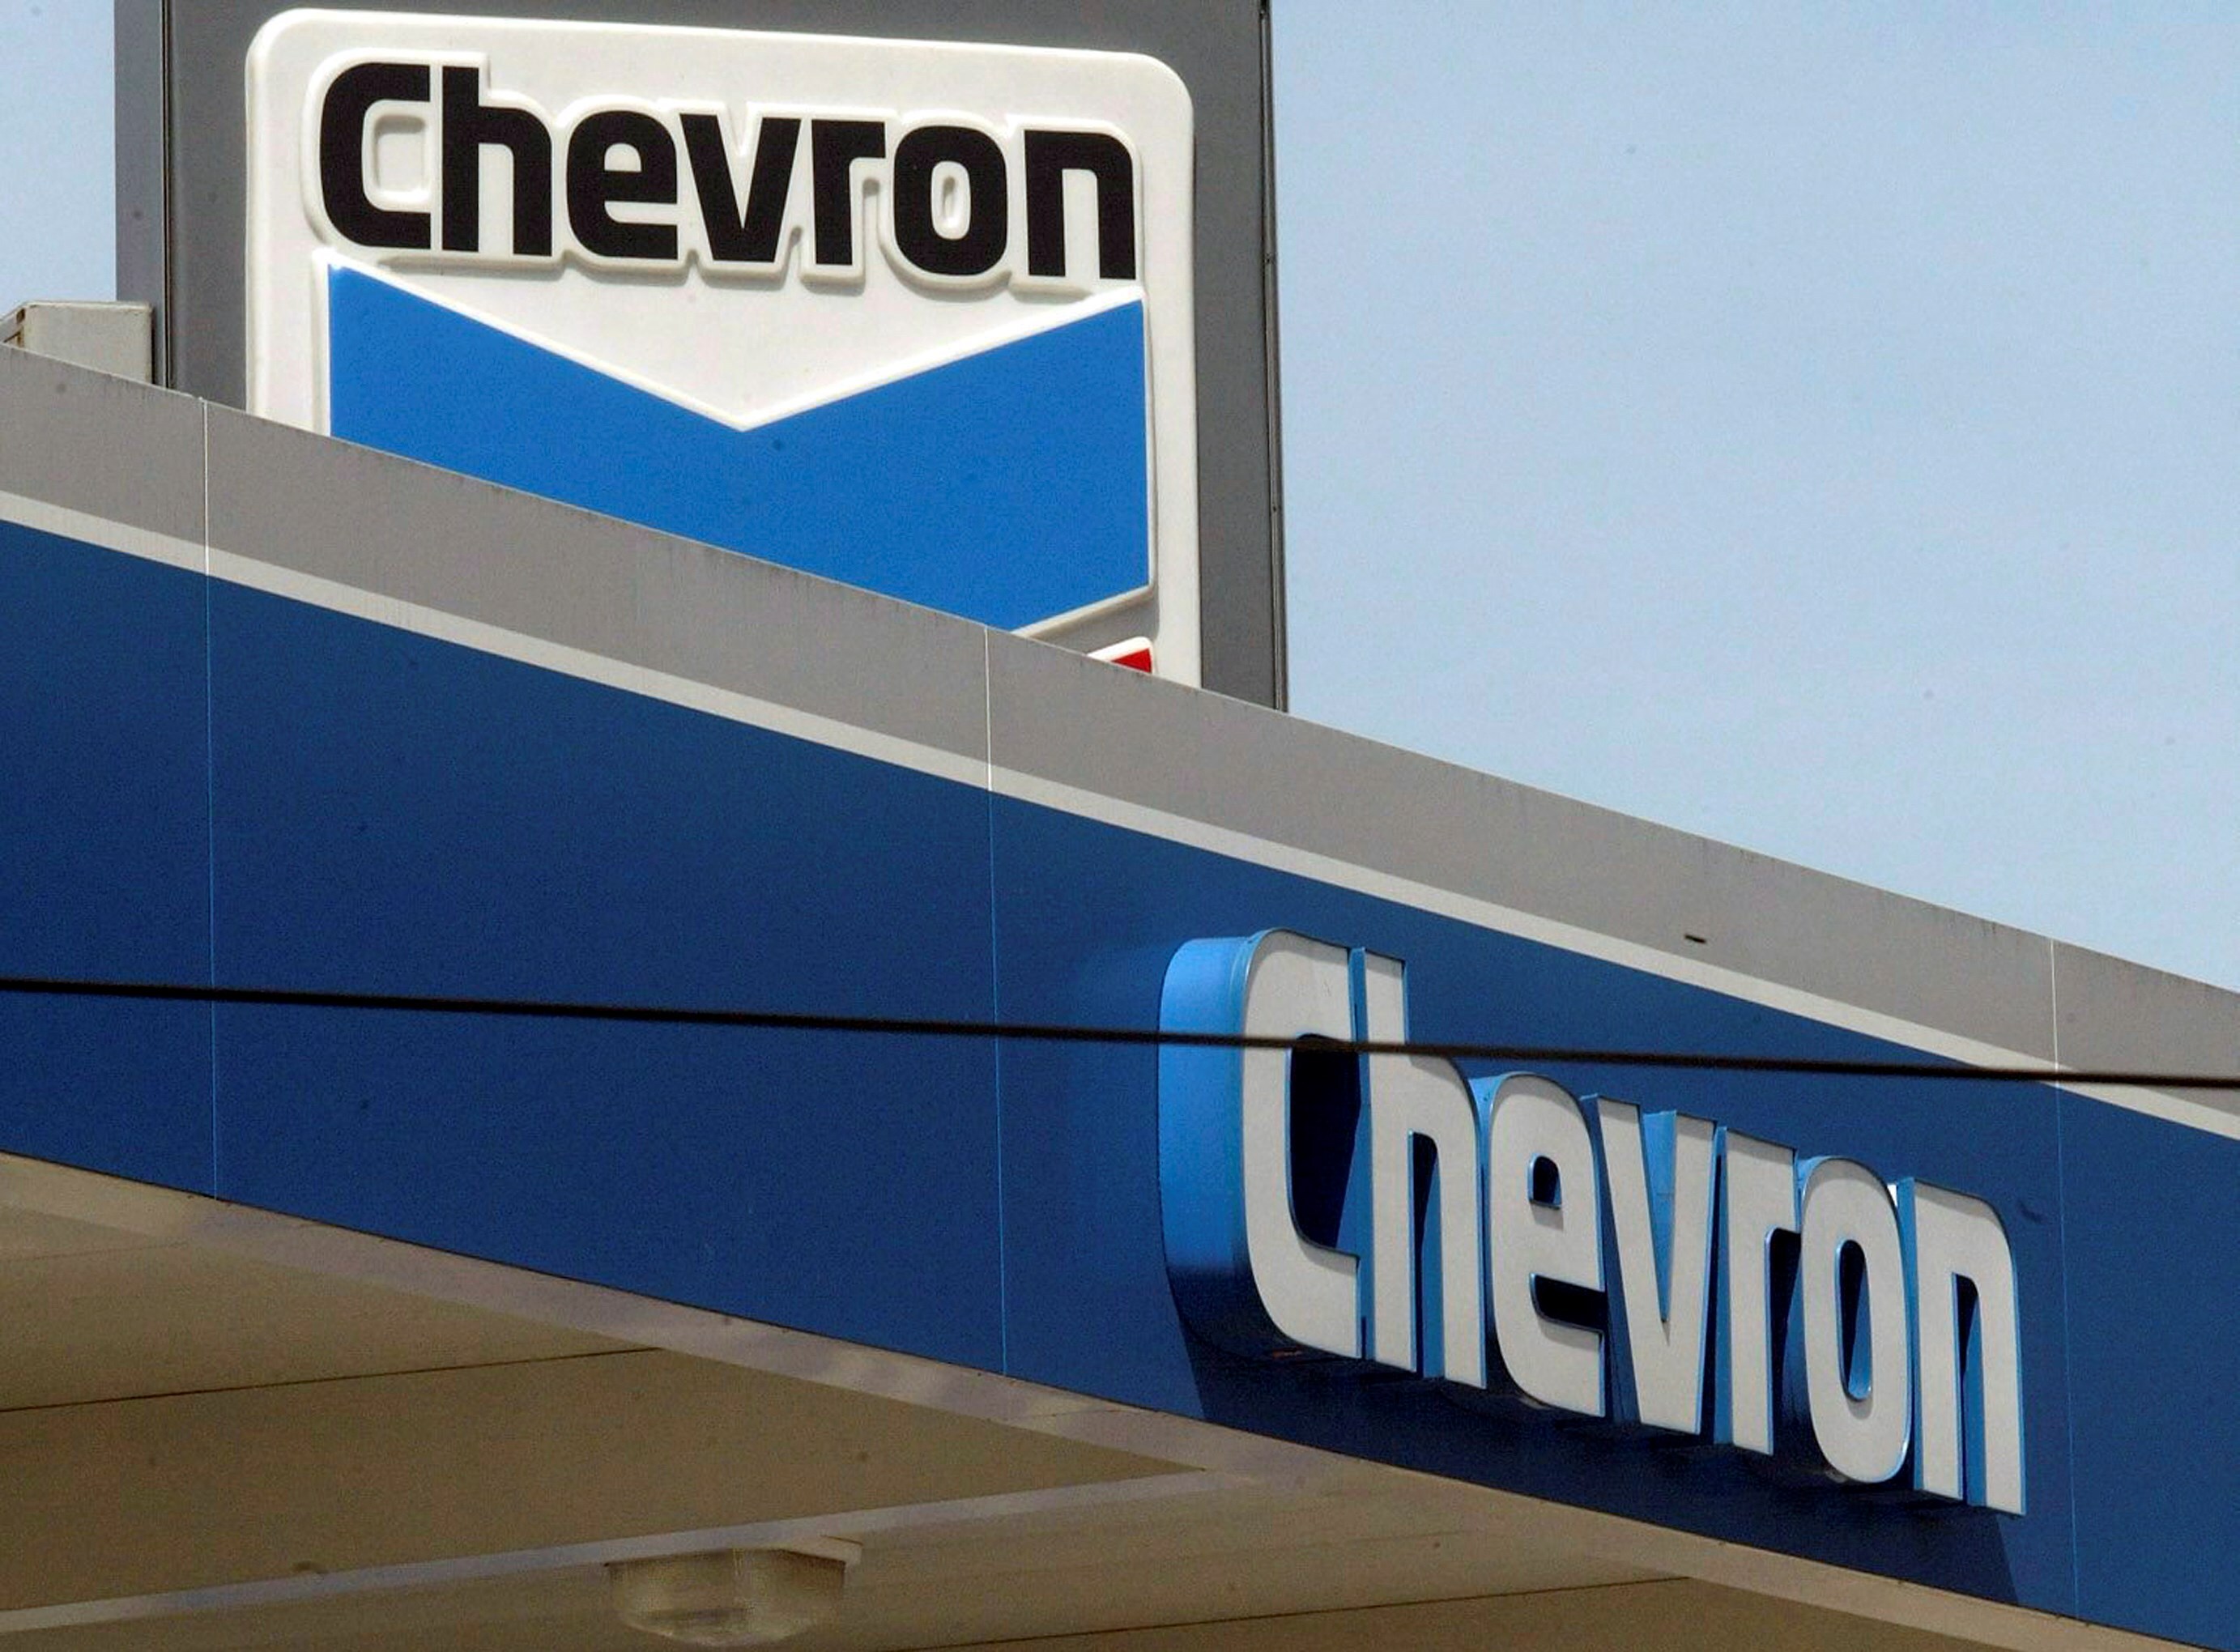 La petrolera Chevron vlvera a operar en Venezuela (EFE/Brendan Mcdermid)
